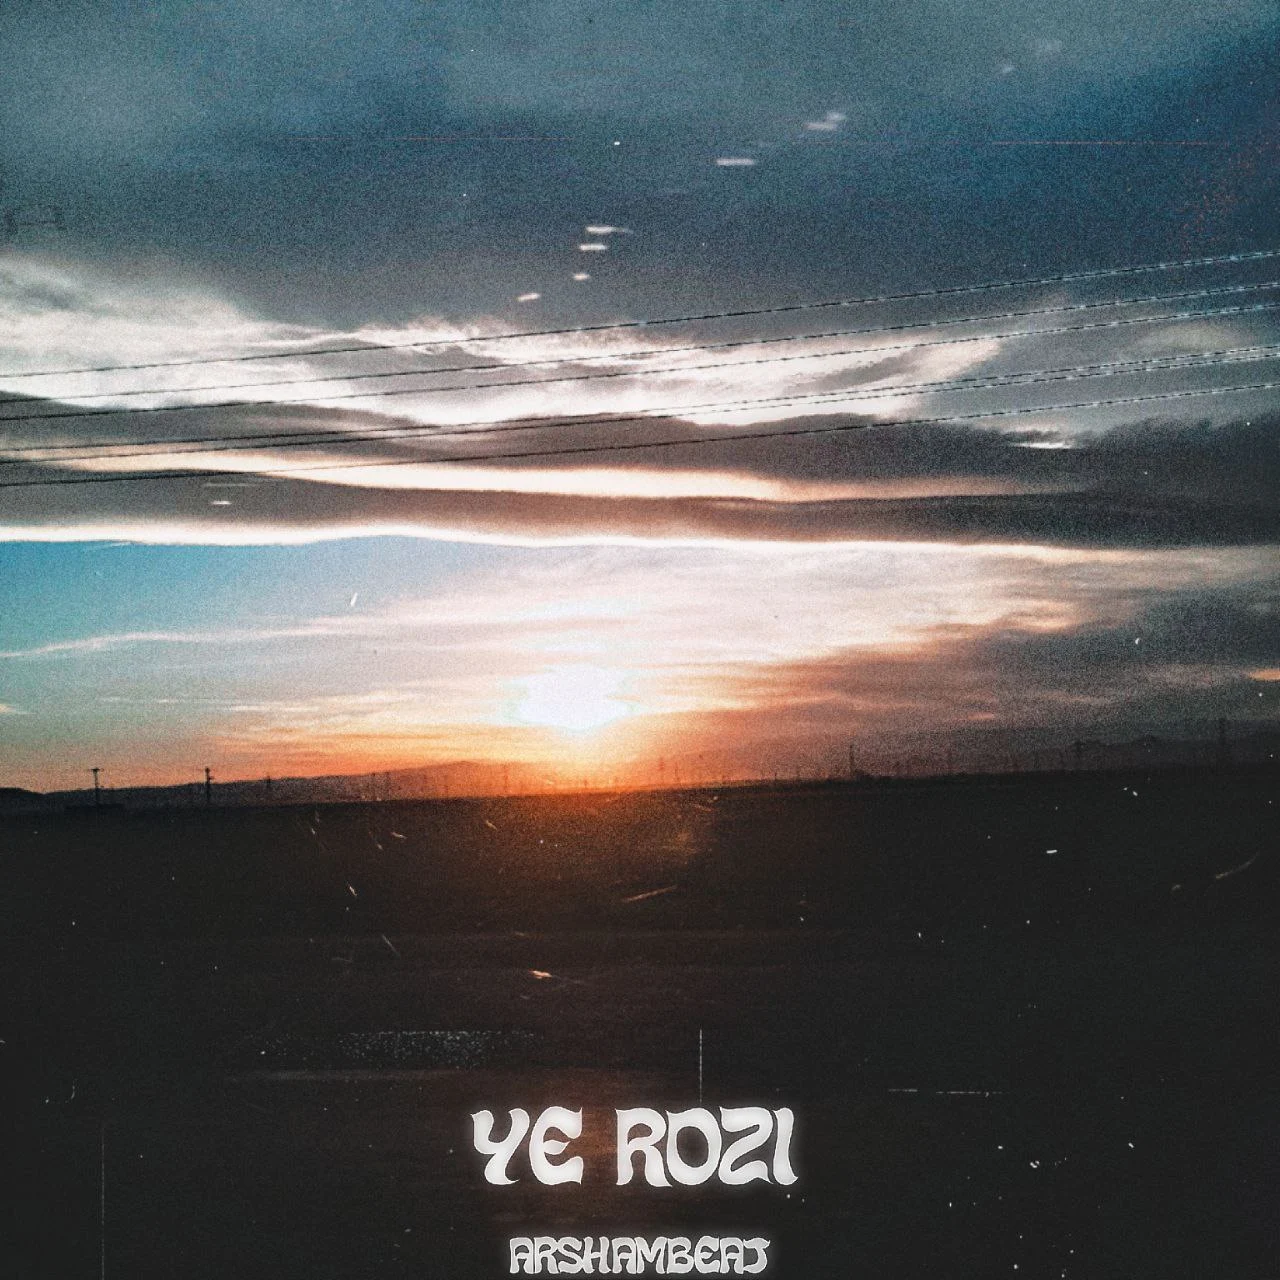 بیت						 
						
							اثر
					
							Arsham beat					
							به نام
					
							Ye roozi